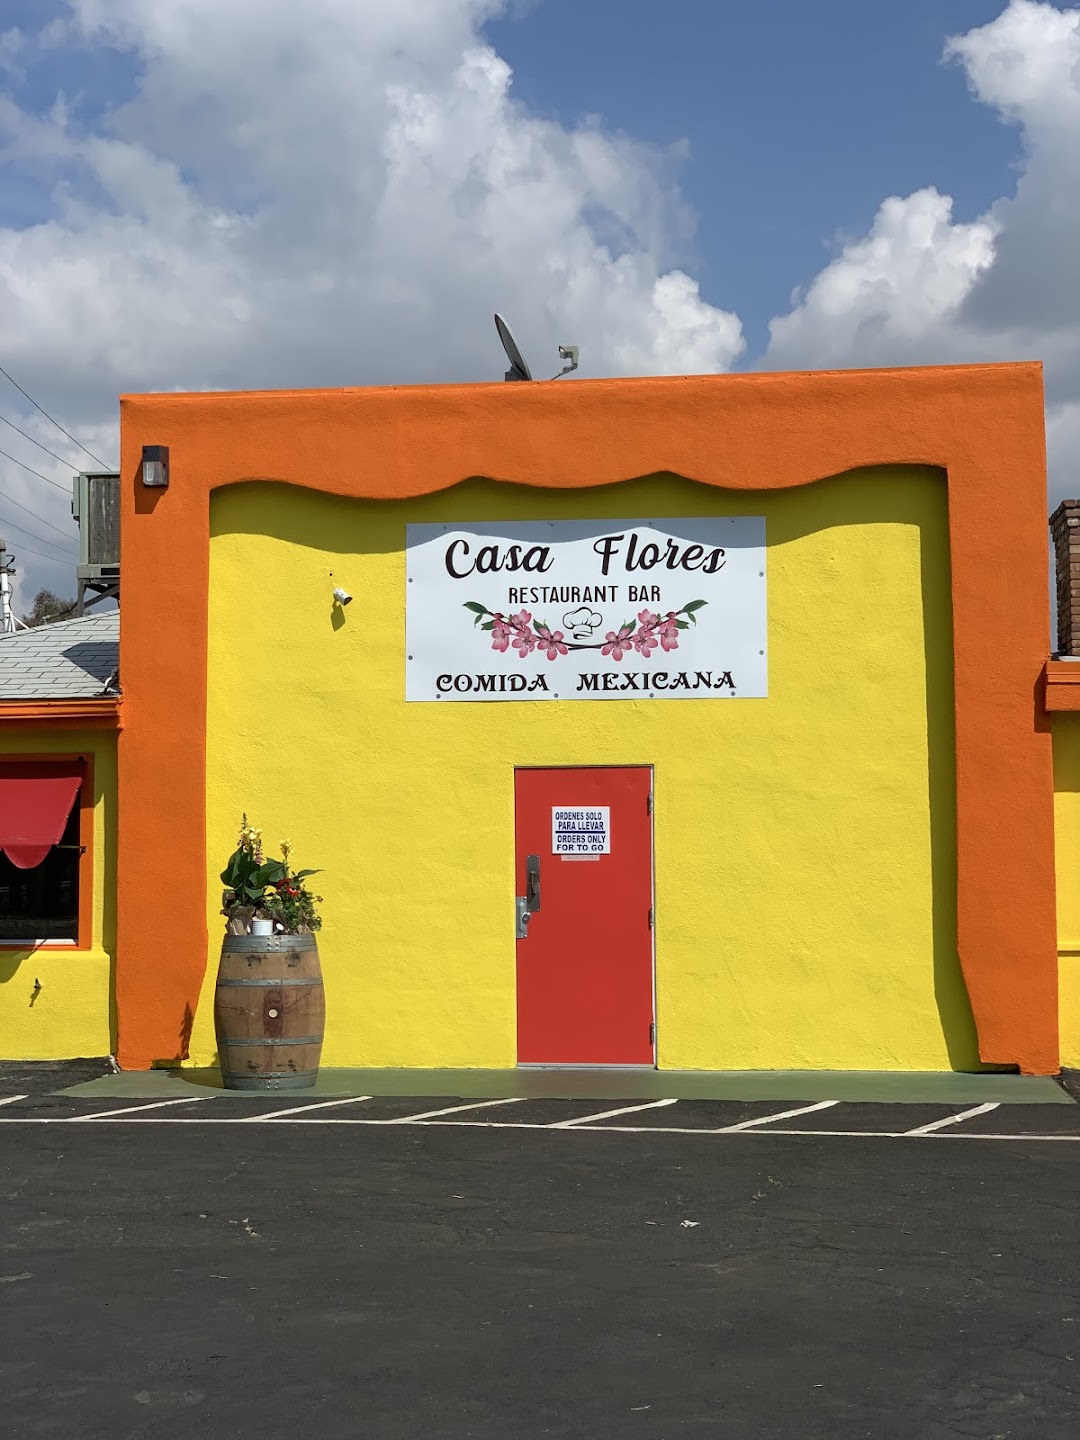 Casa Flores Restaurant Bar